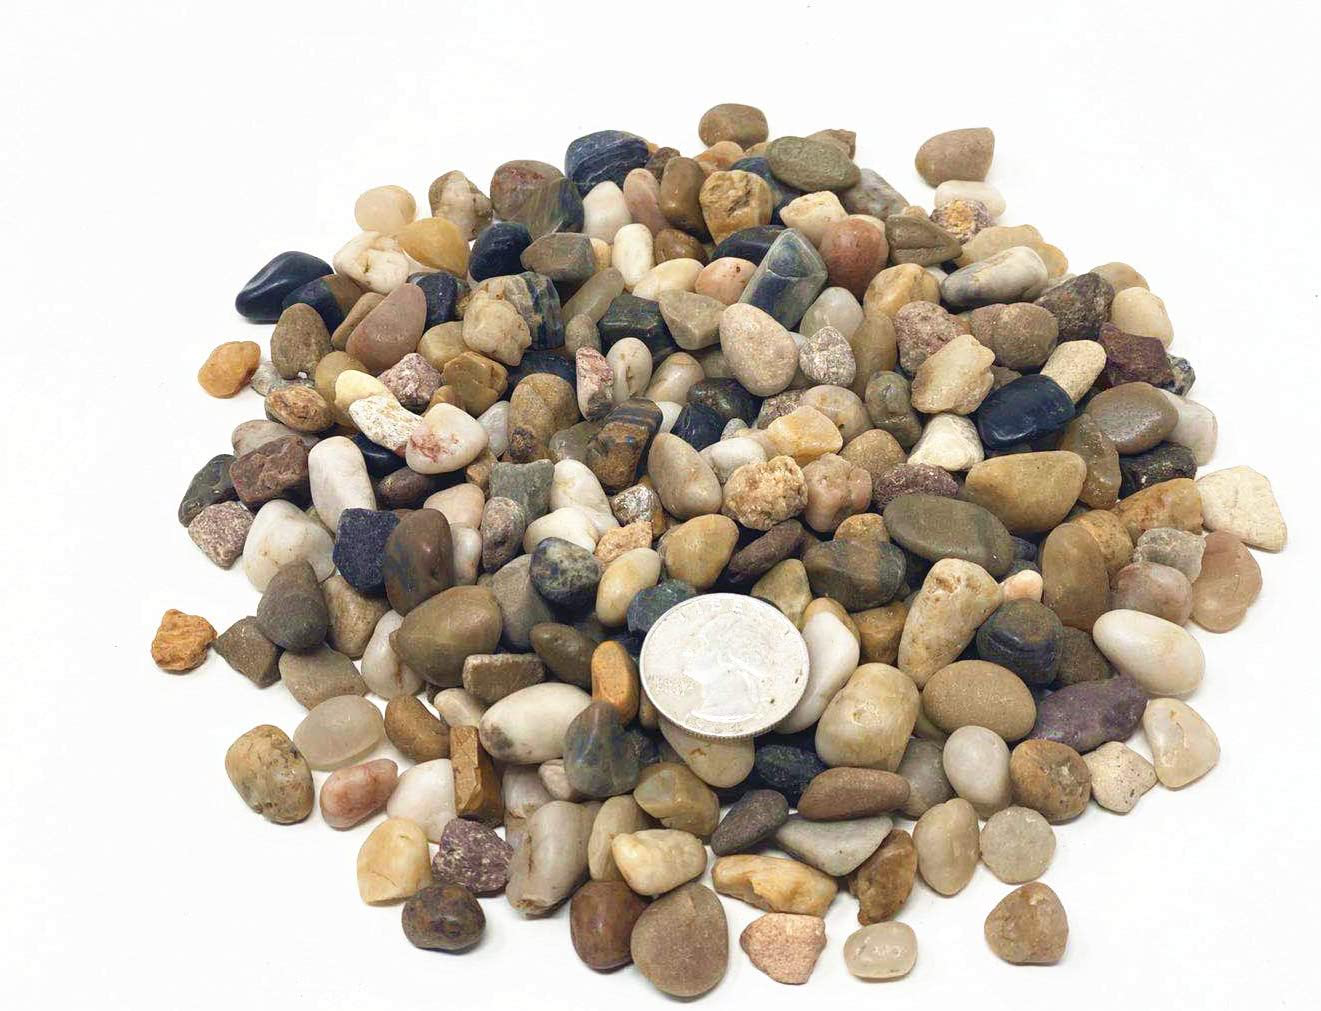 TSY TOOL 3 Pounds Small River Rocks, Pebbles, Outdoor Decorative Stones, Natural Gravel, for Aquariums, Landscaping, Vase Fillers, Succulent, Tillandsia, Cactus Pot, Terrarium Plants